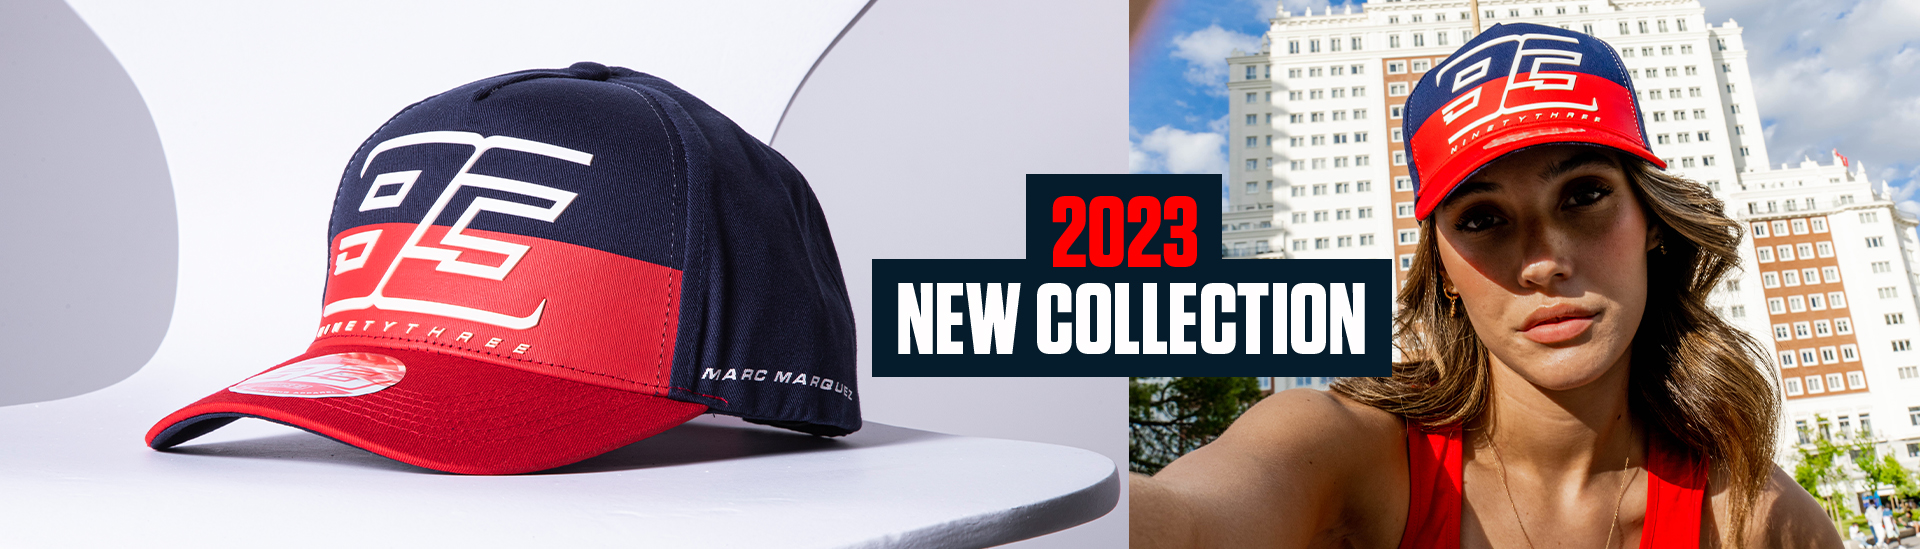 Colección 2022